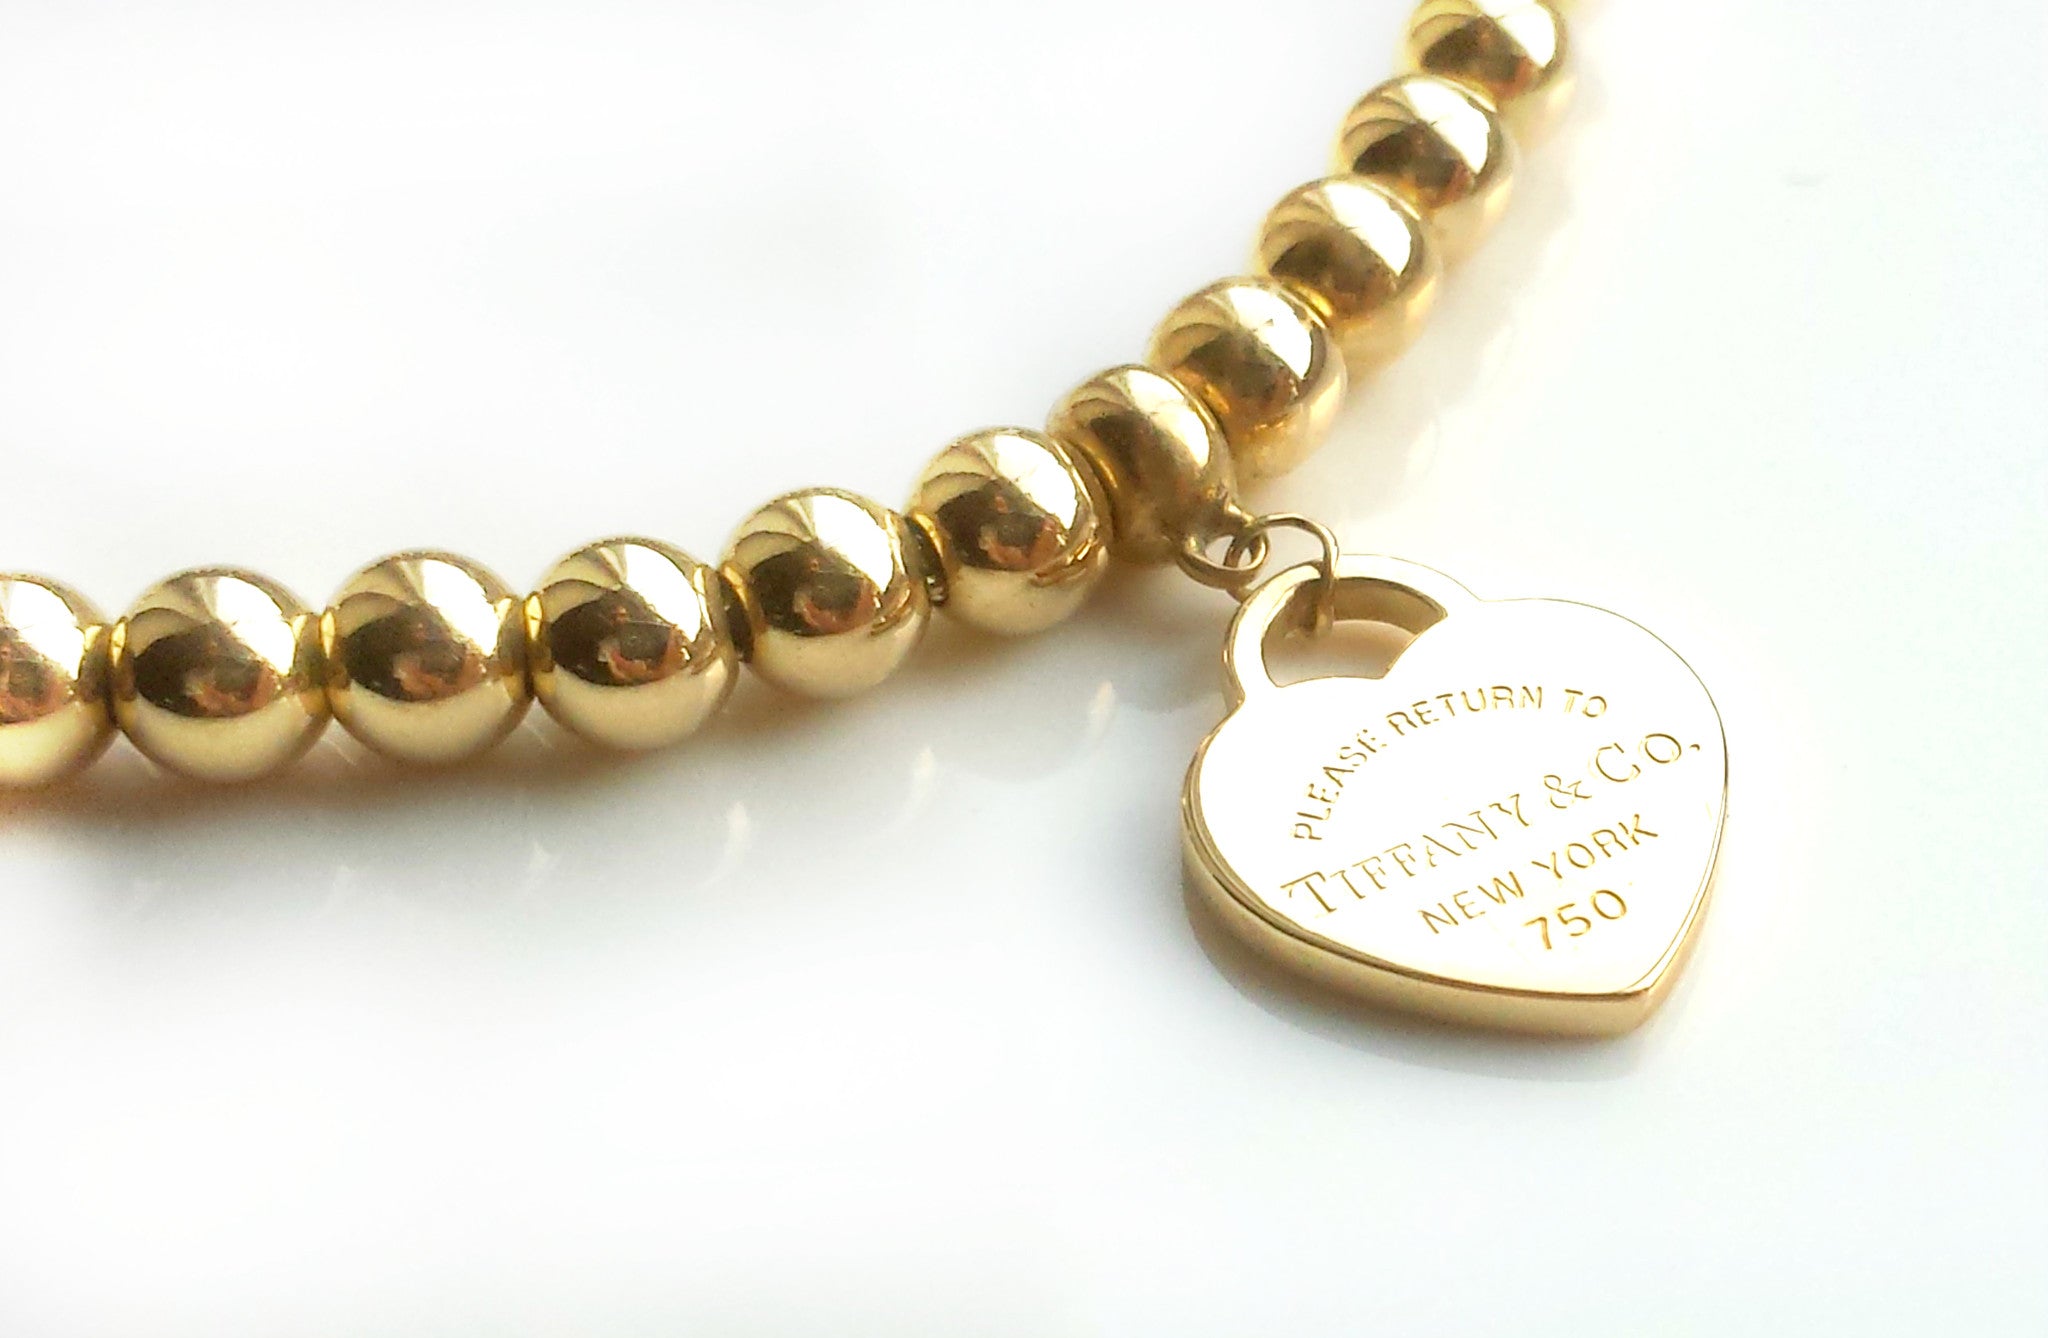 Tiffany & Co. Return to 18k Yellow Gold Bead Bracelet & Mini Heart Tag